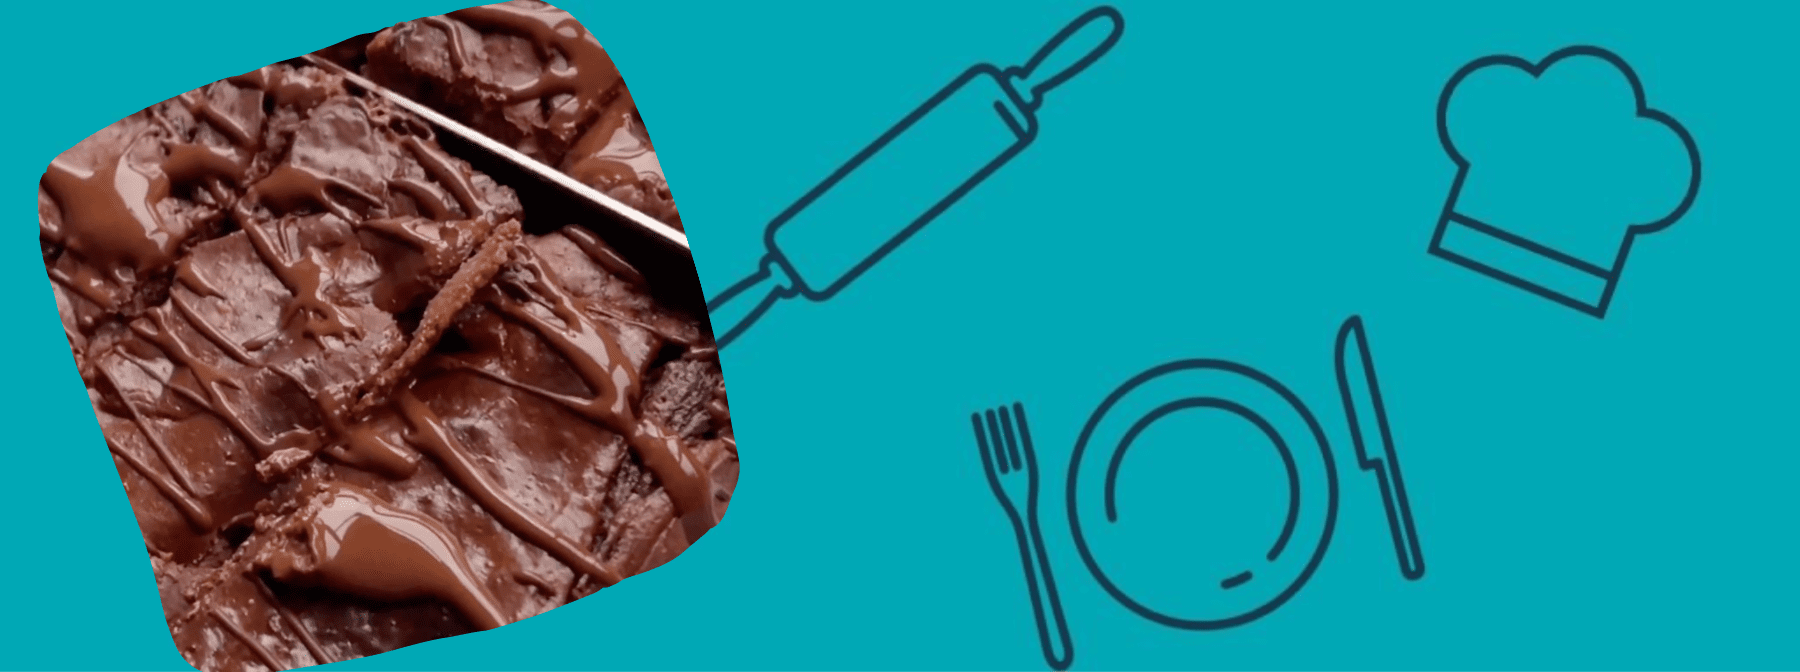 Yoga Bar Protein Chocolate Brownie 60 Gm : Buy Yoga Bar Protein Chocolate  Brownie 60 Gm Online at Best Price in India